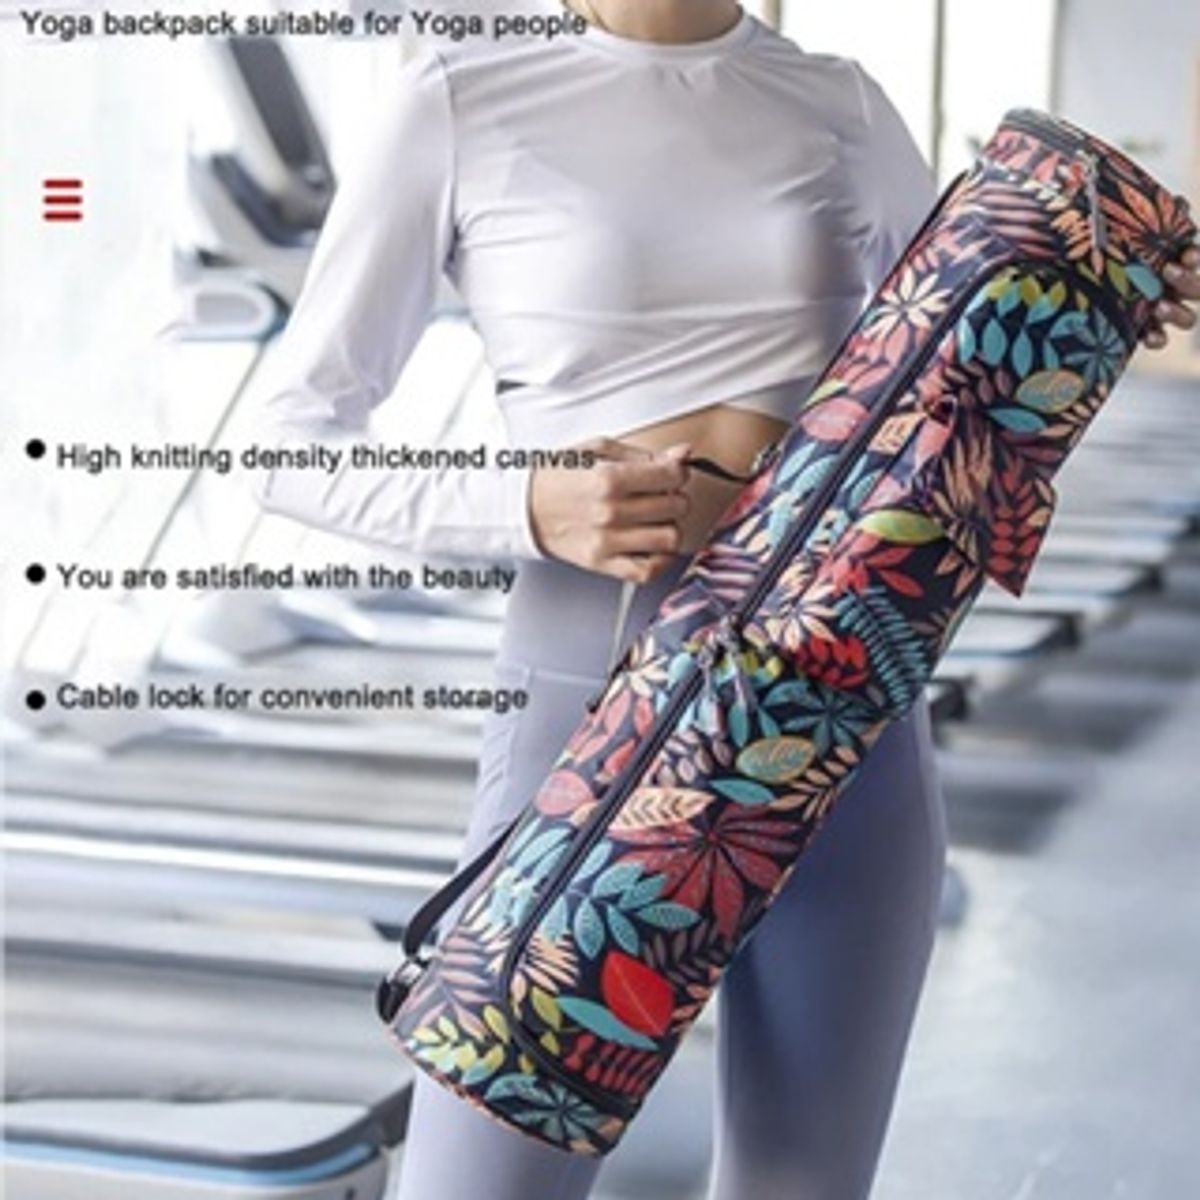 Yoga Bags — Aurorae Yoga